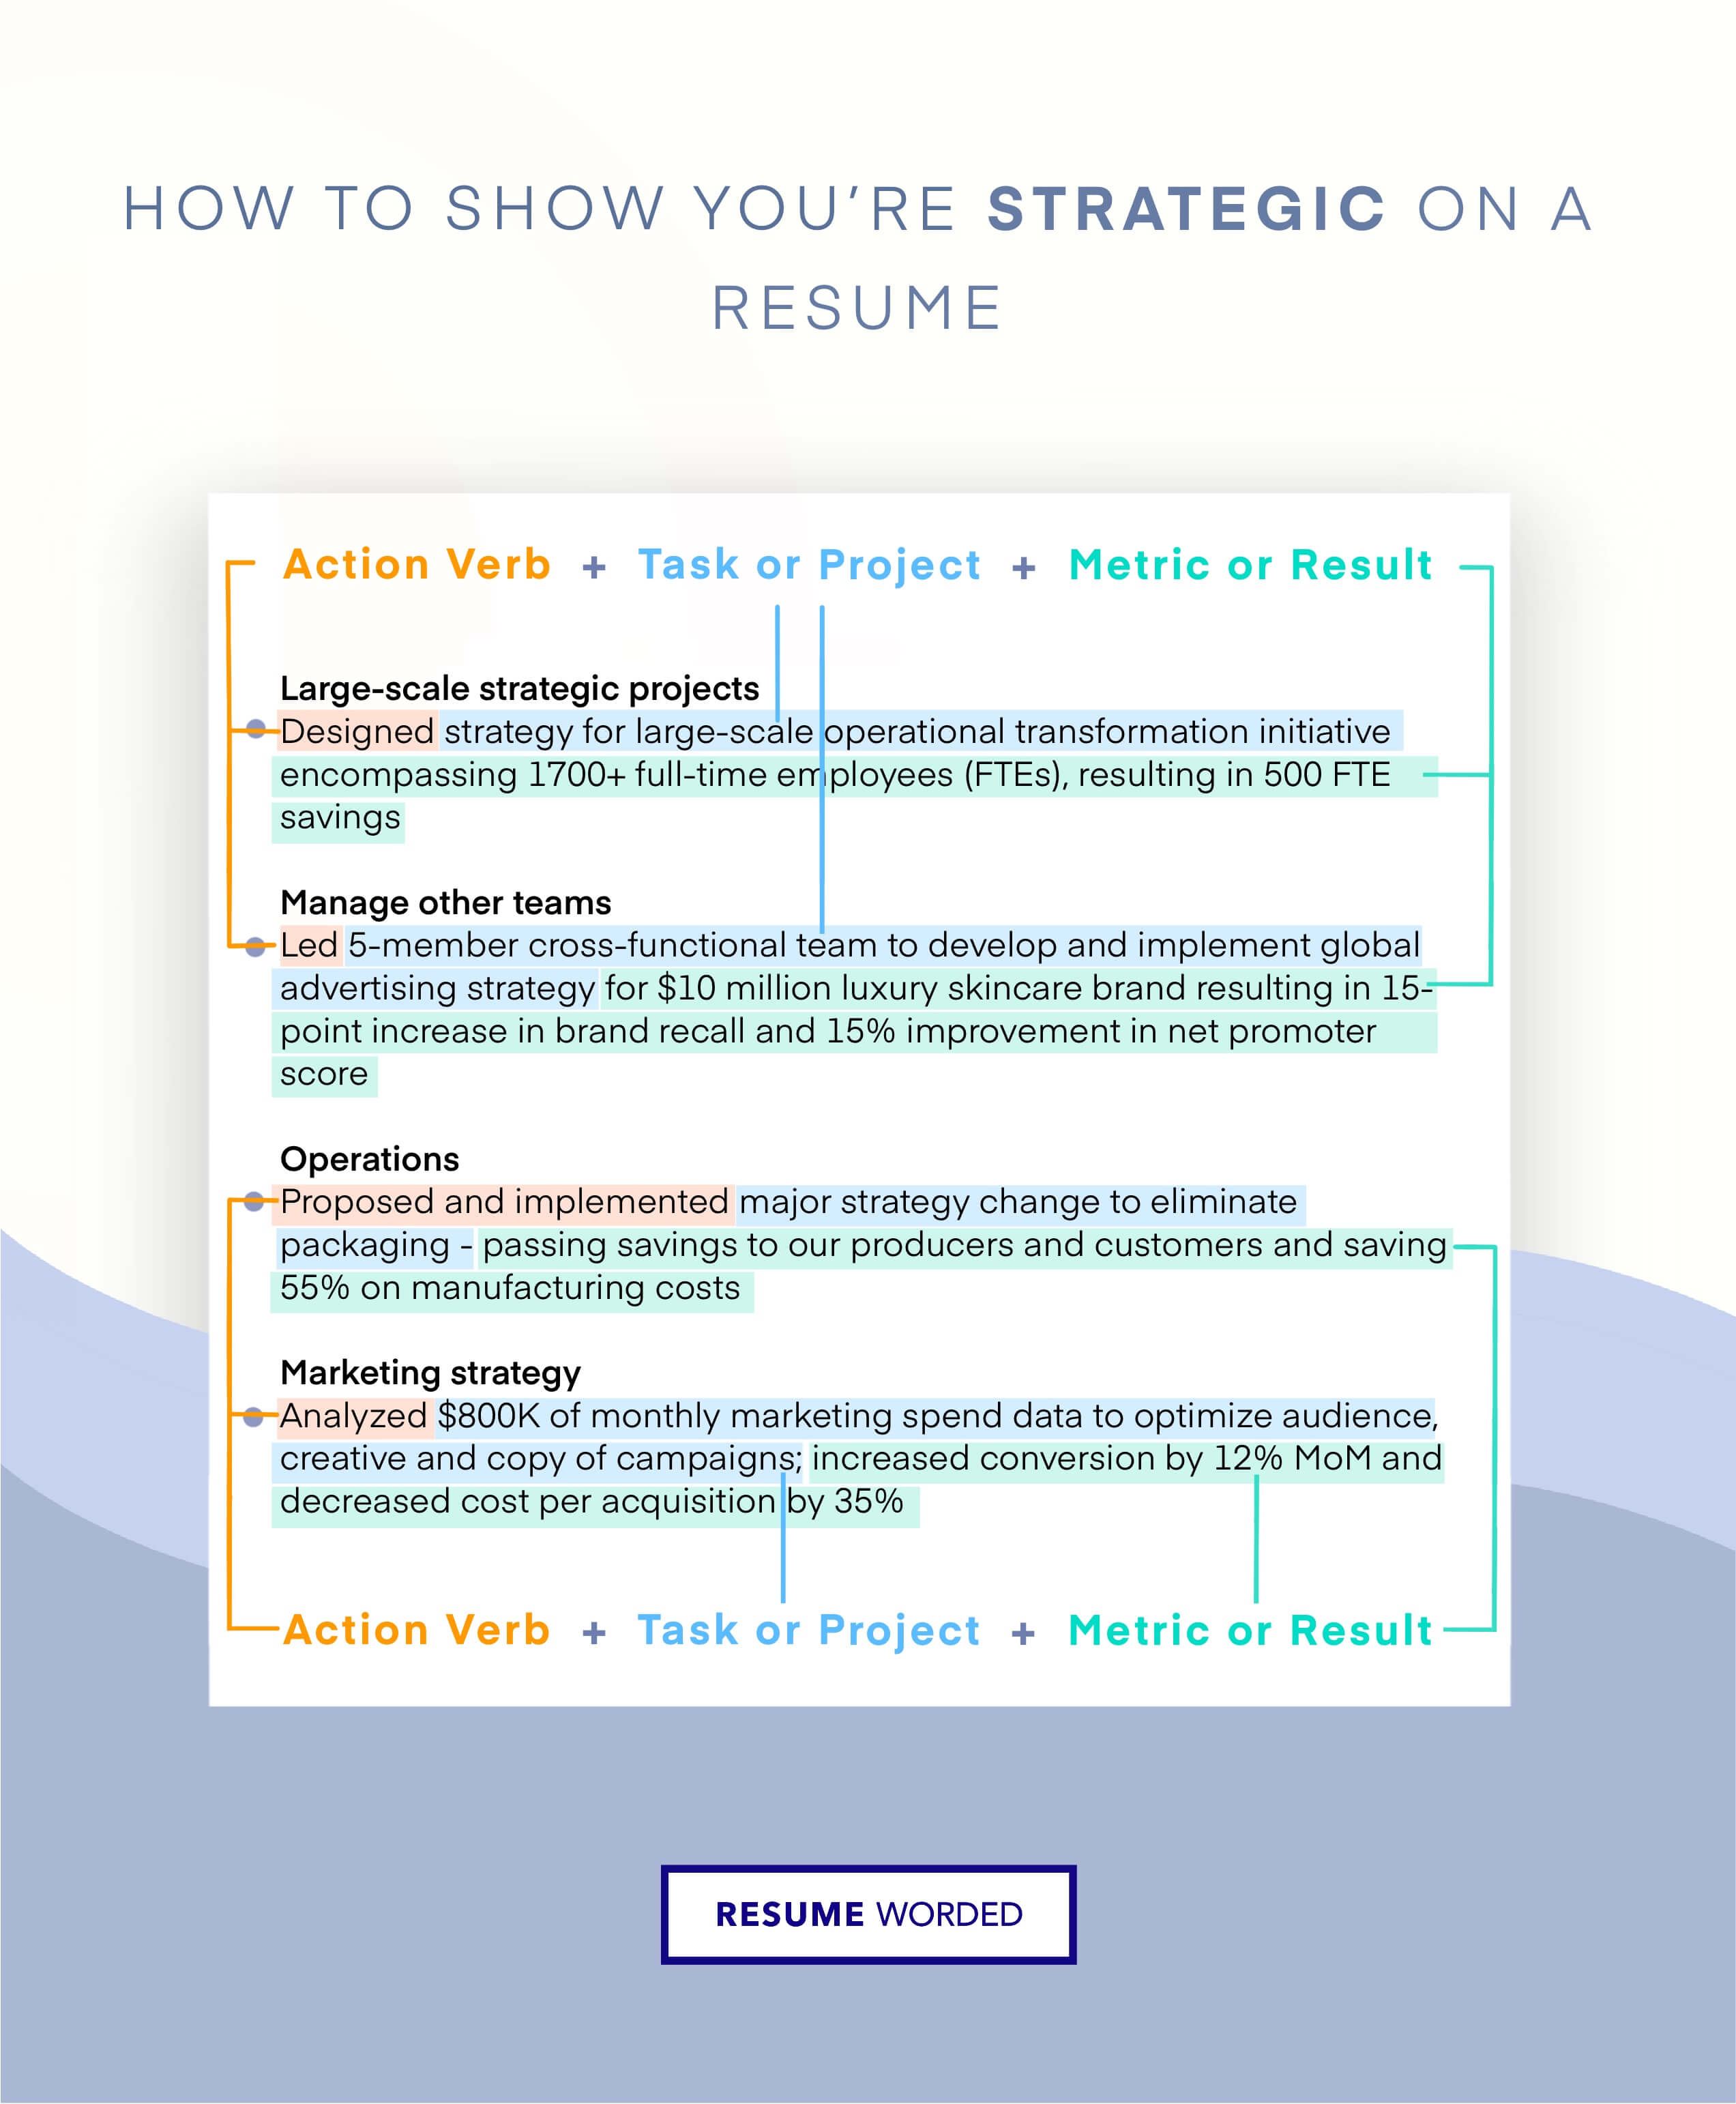 Demonstrate strategic thinking - Key Account Manager CV